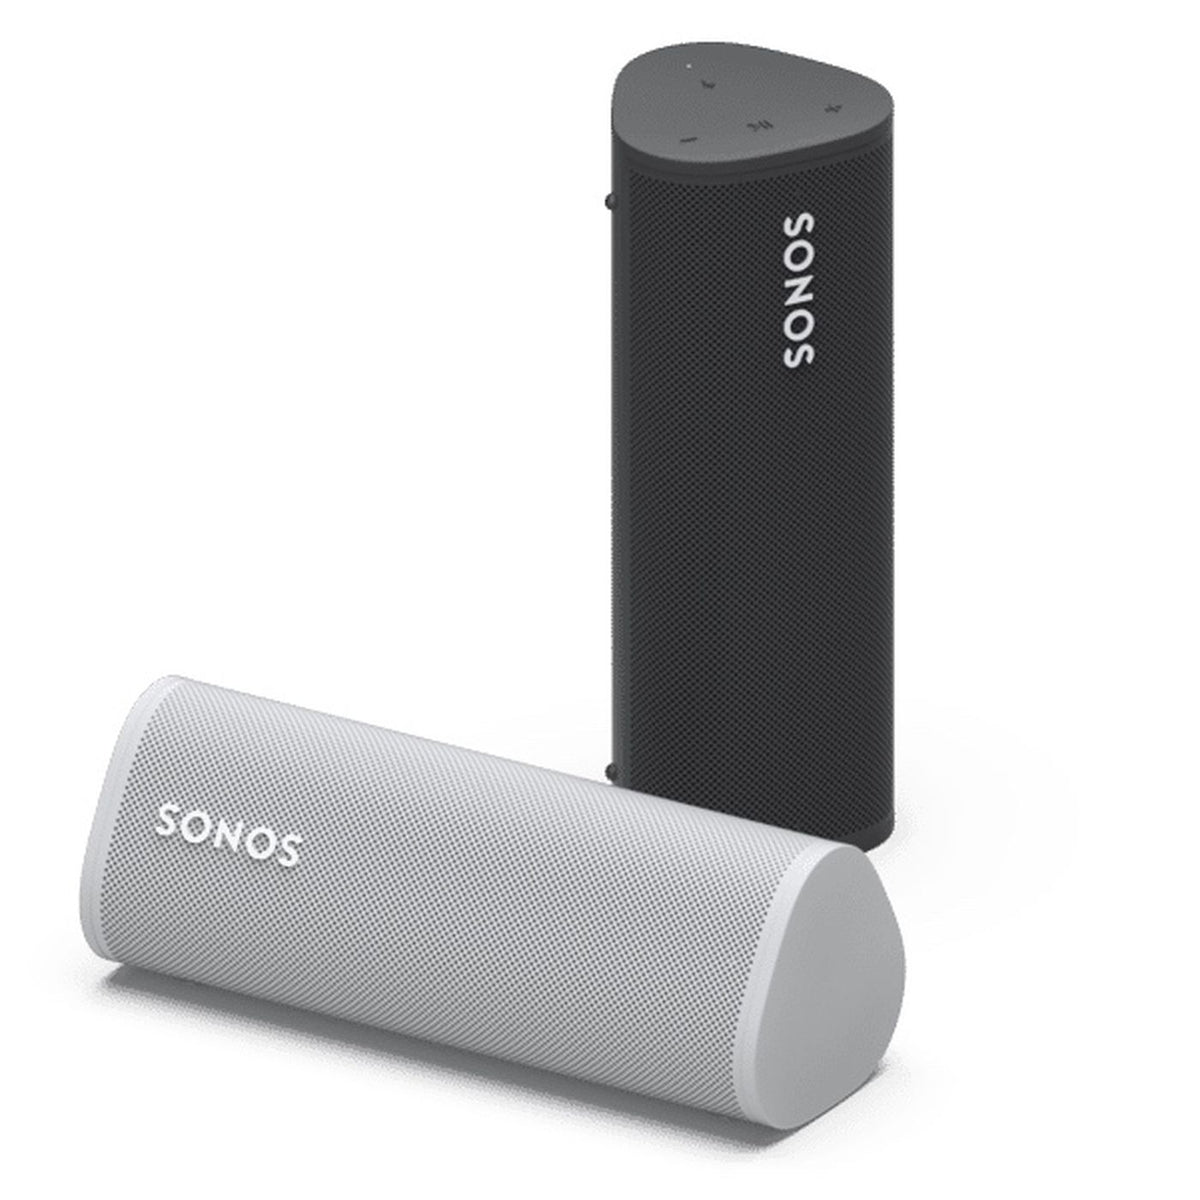 Sonos Roam Wireless Charger